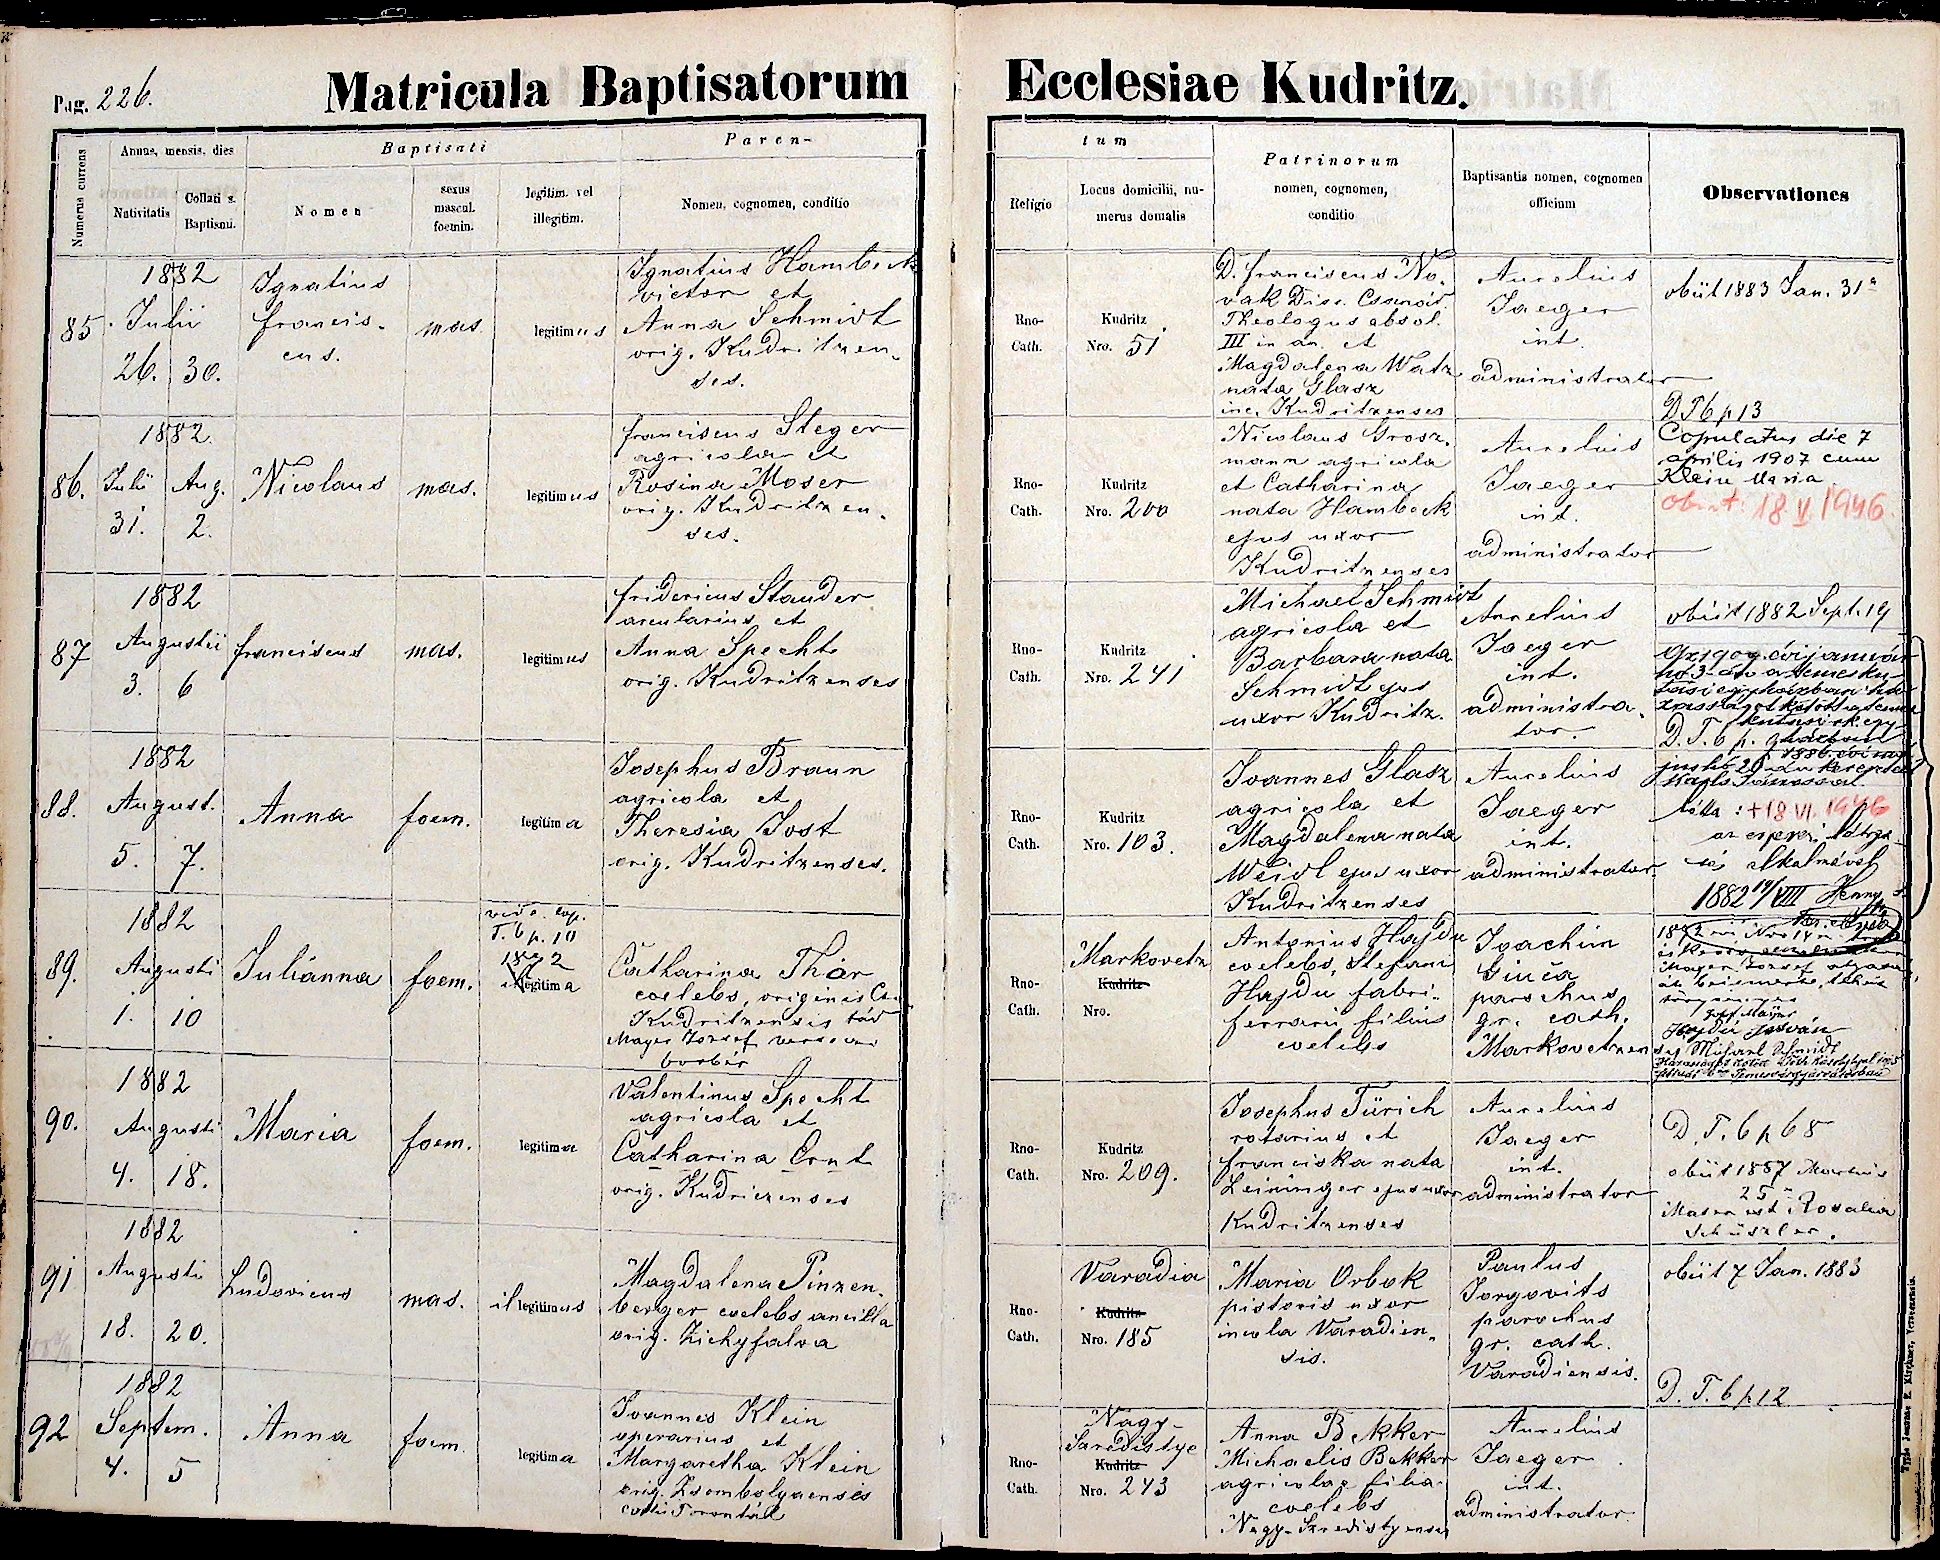 images/church_records/BIRTHS/1880-1883B/1882/226